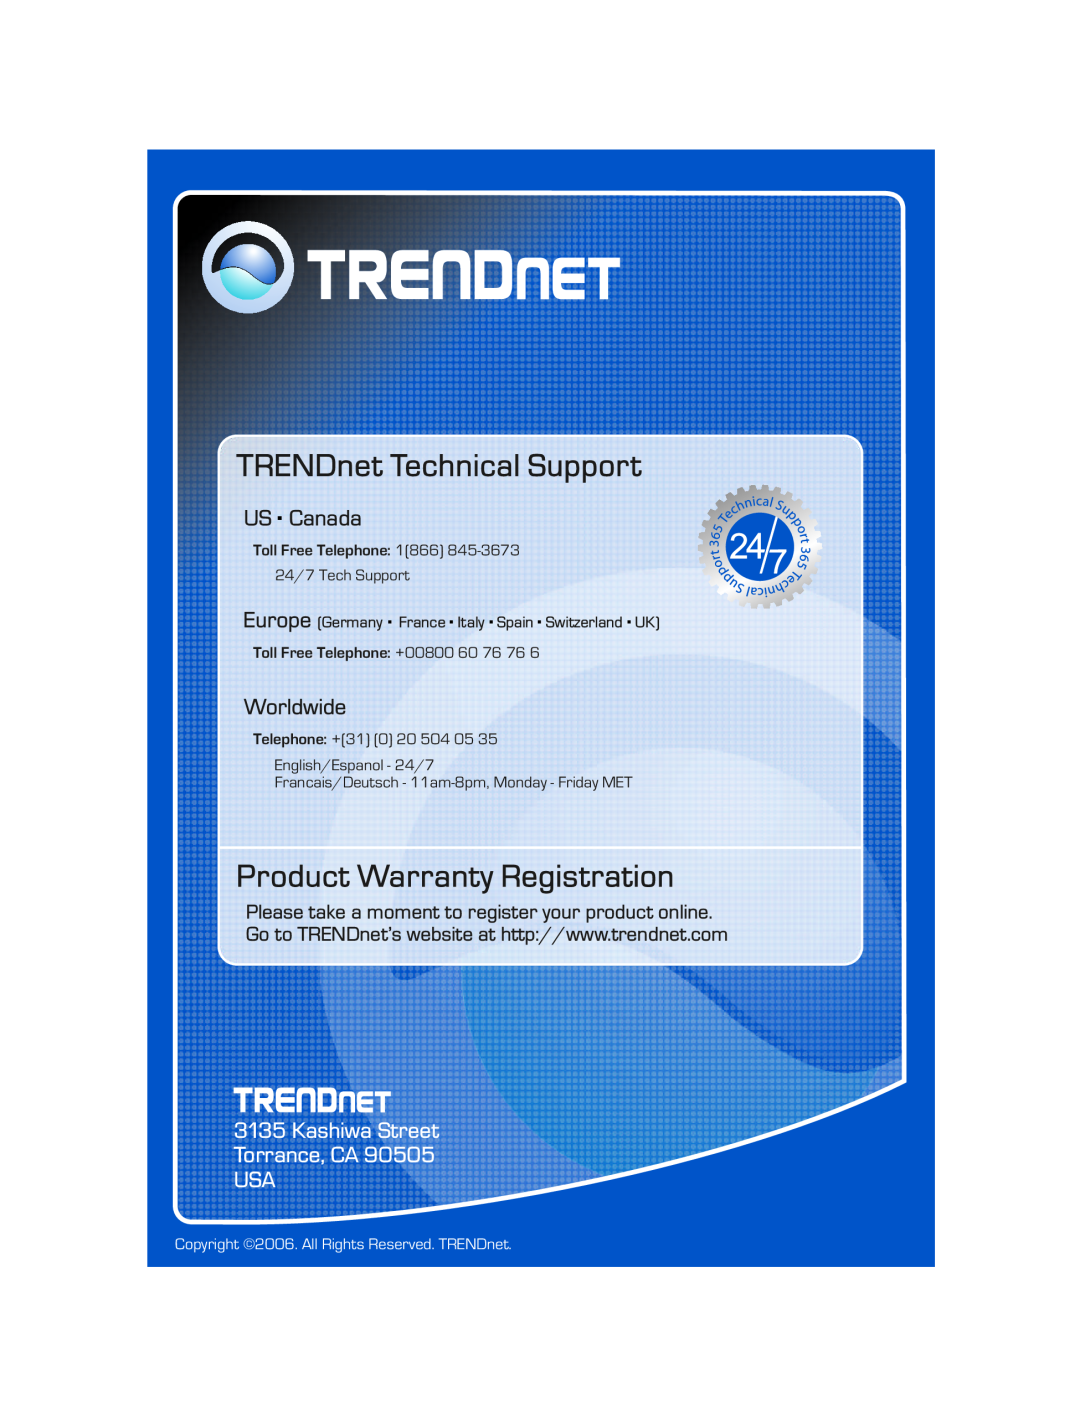 TRENDnet TRENDNET Kashiwa Street Torrance, CA USA, TRENDnet Technical Support, Product Warranty Registration, US . Canada 